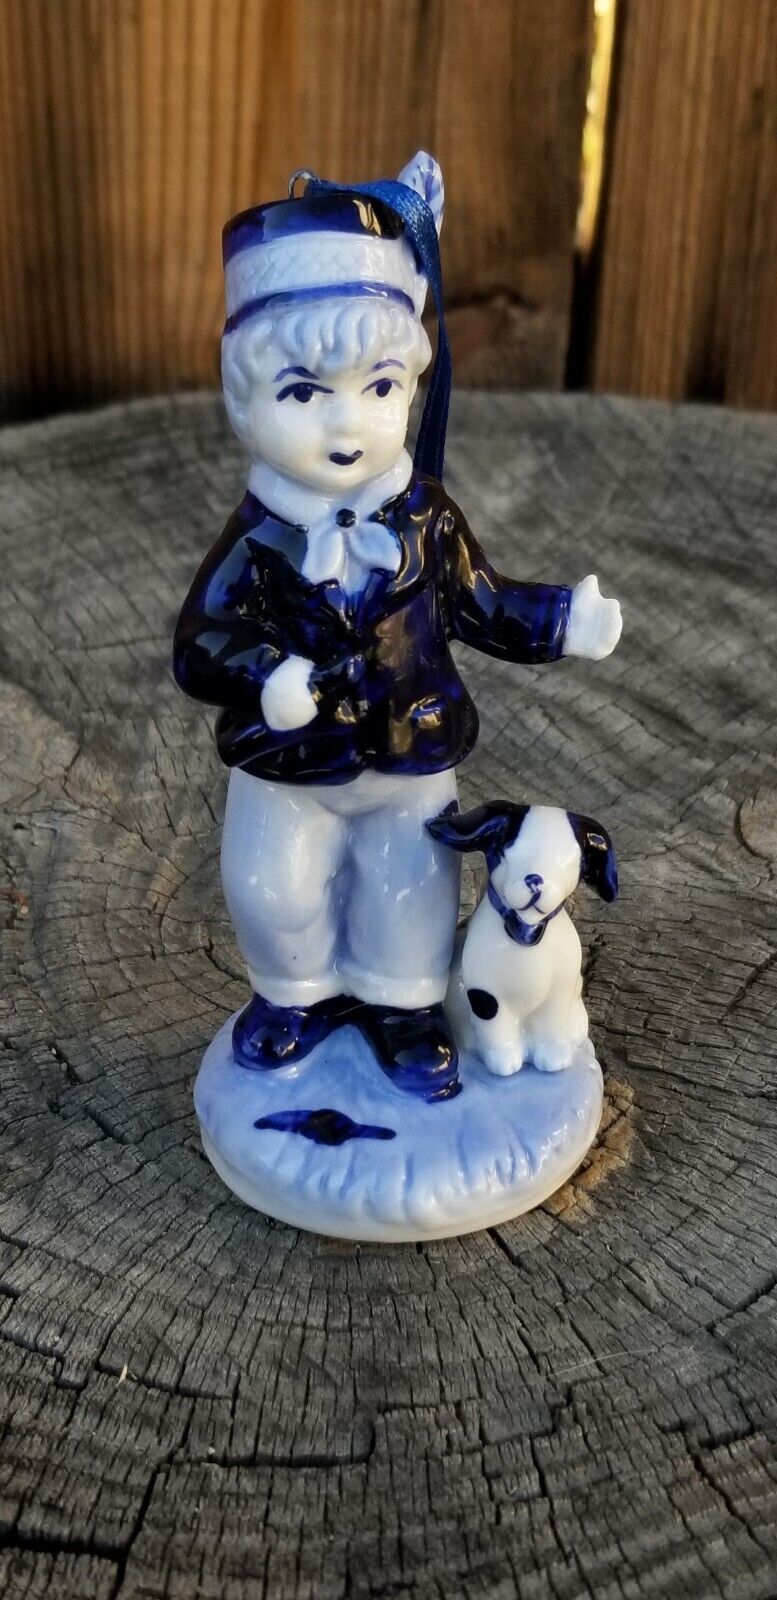 Delft Blue Style Little Dutch Boy & His Dog Ornament/Figurine 4 Inches